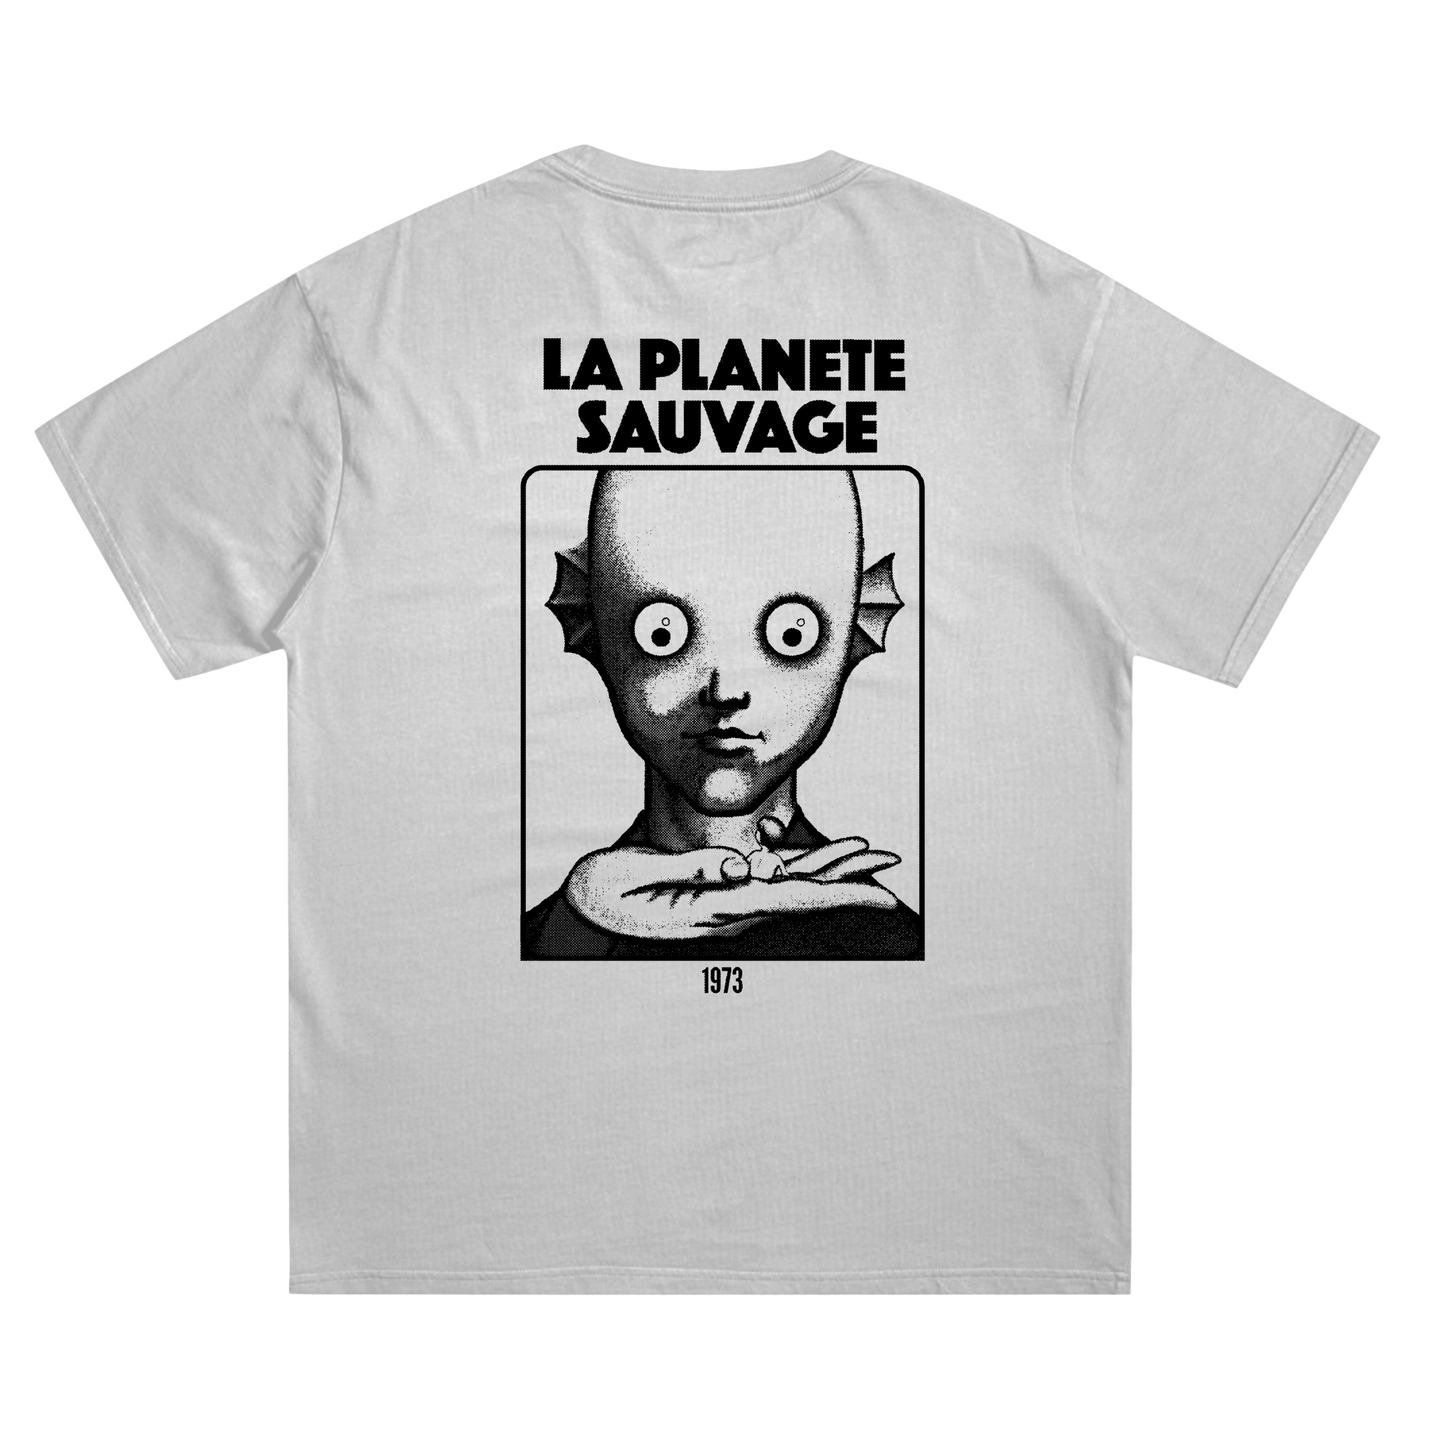 Fantastic Planet/La Planete Sauvage